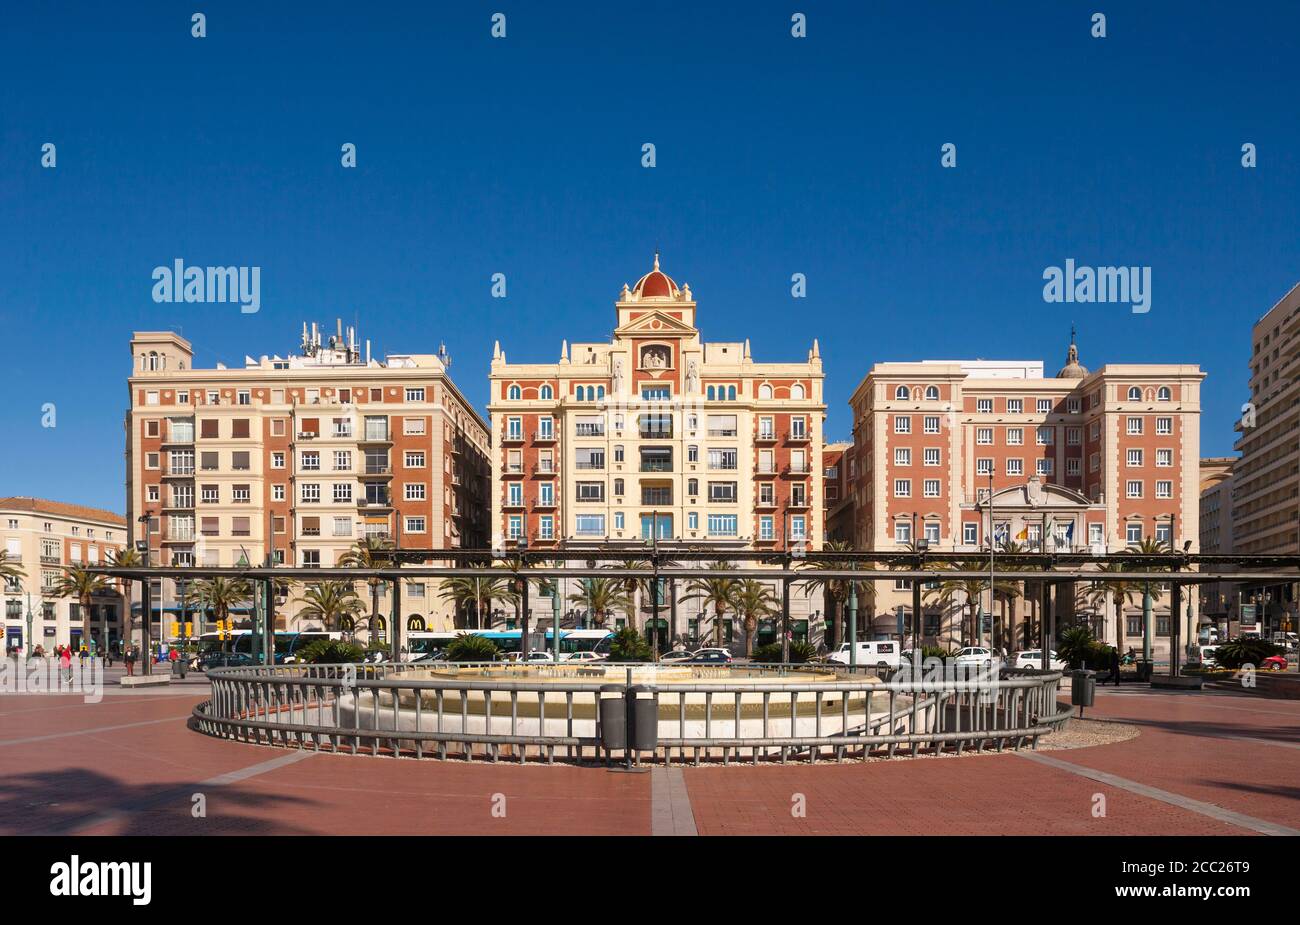 Spain, Malaga, View of old town and Plaza de La Marina Stock Photo